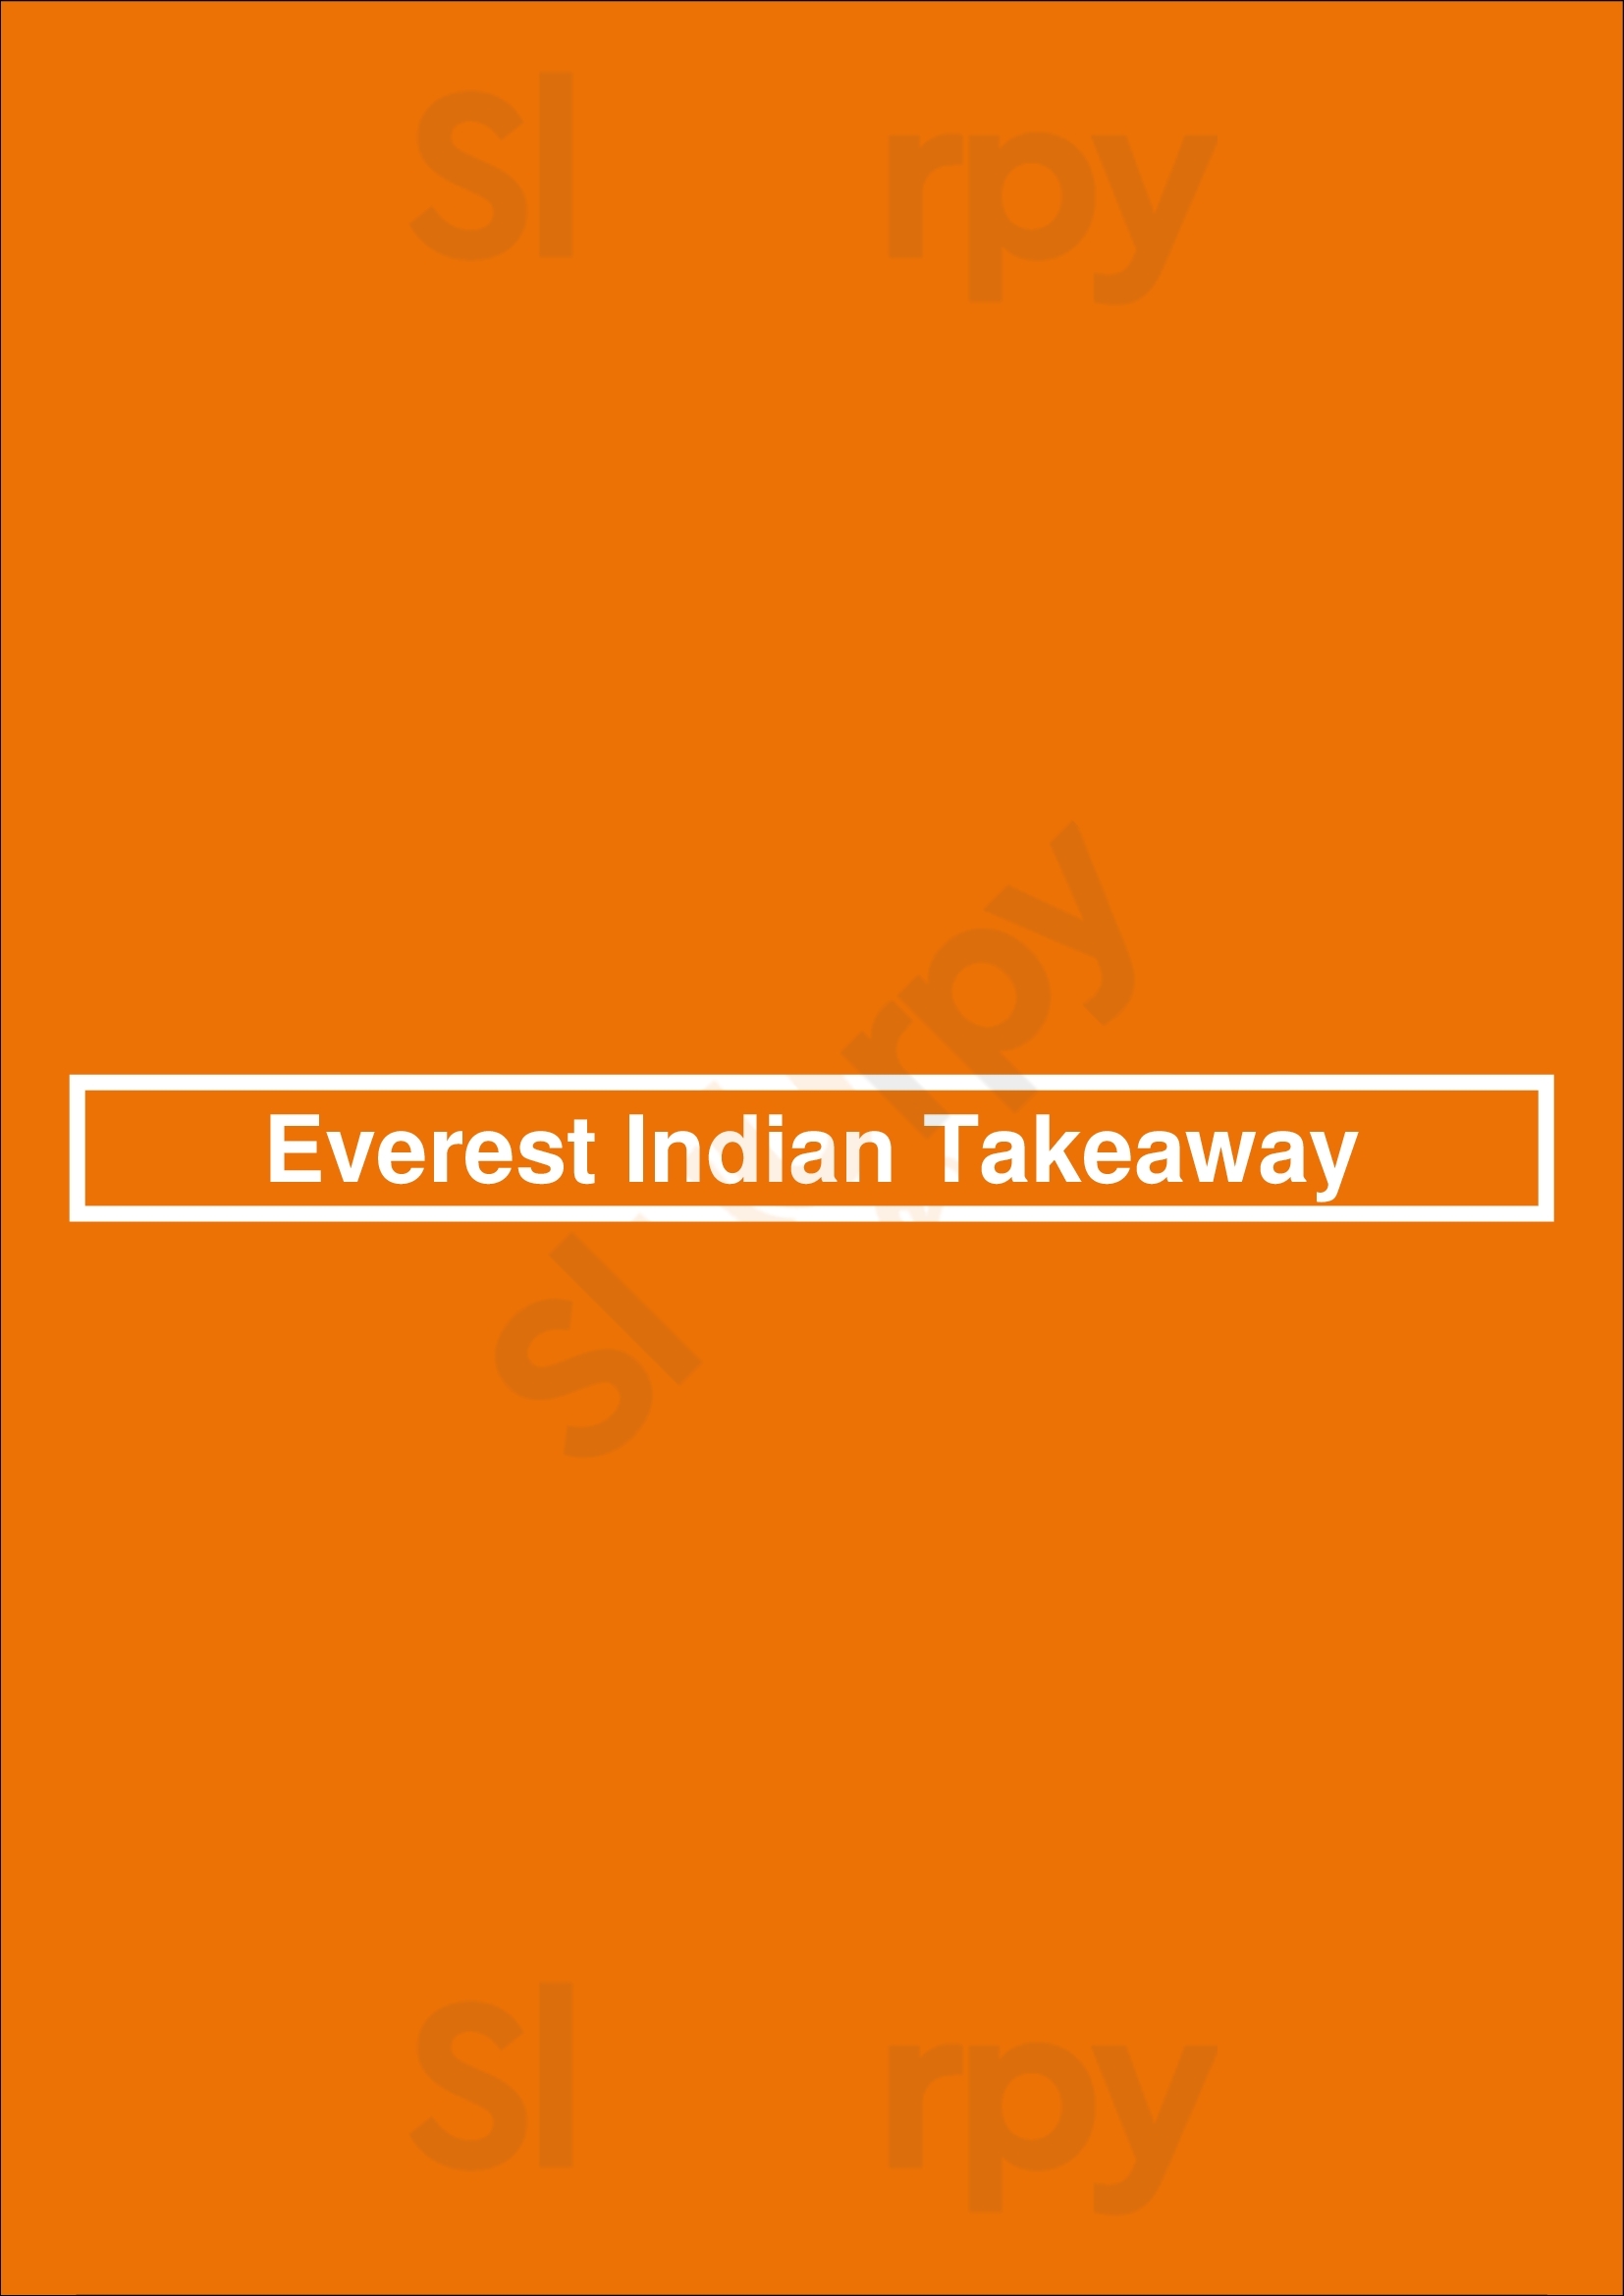 Everest Indian Takeaway Glasgow Menu - 1